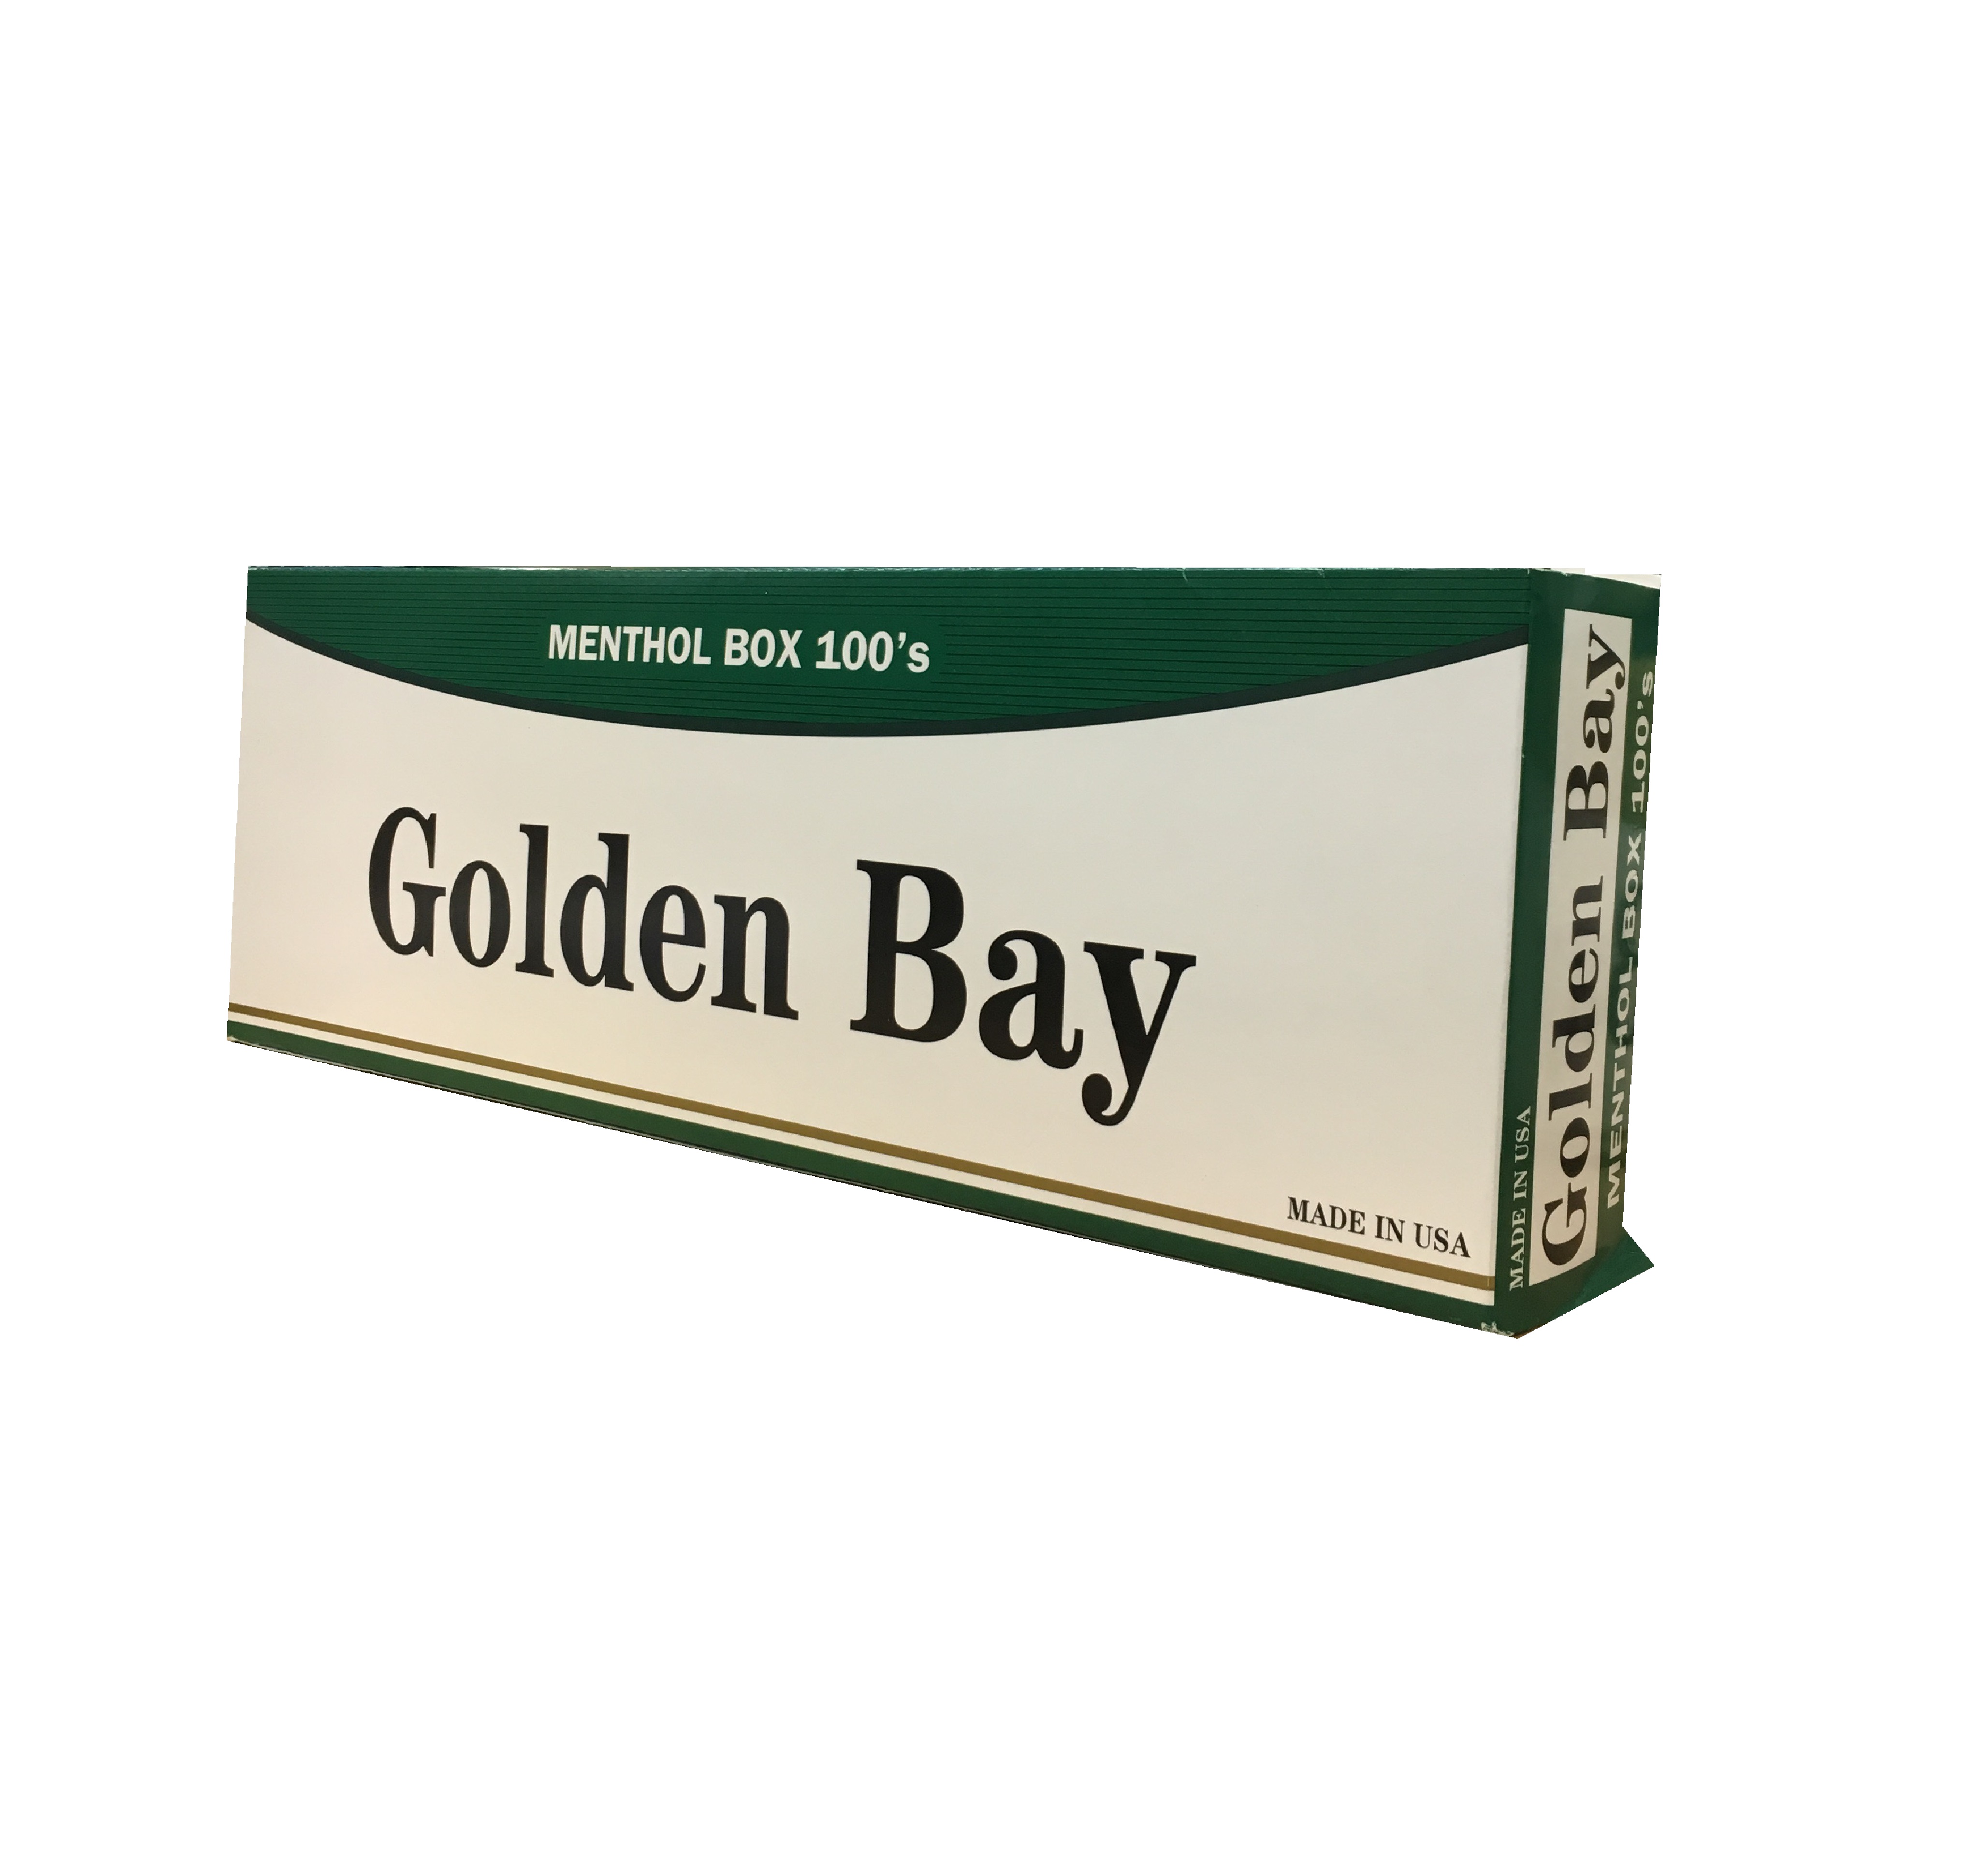 Golden bay menthol 100 box